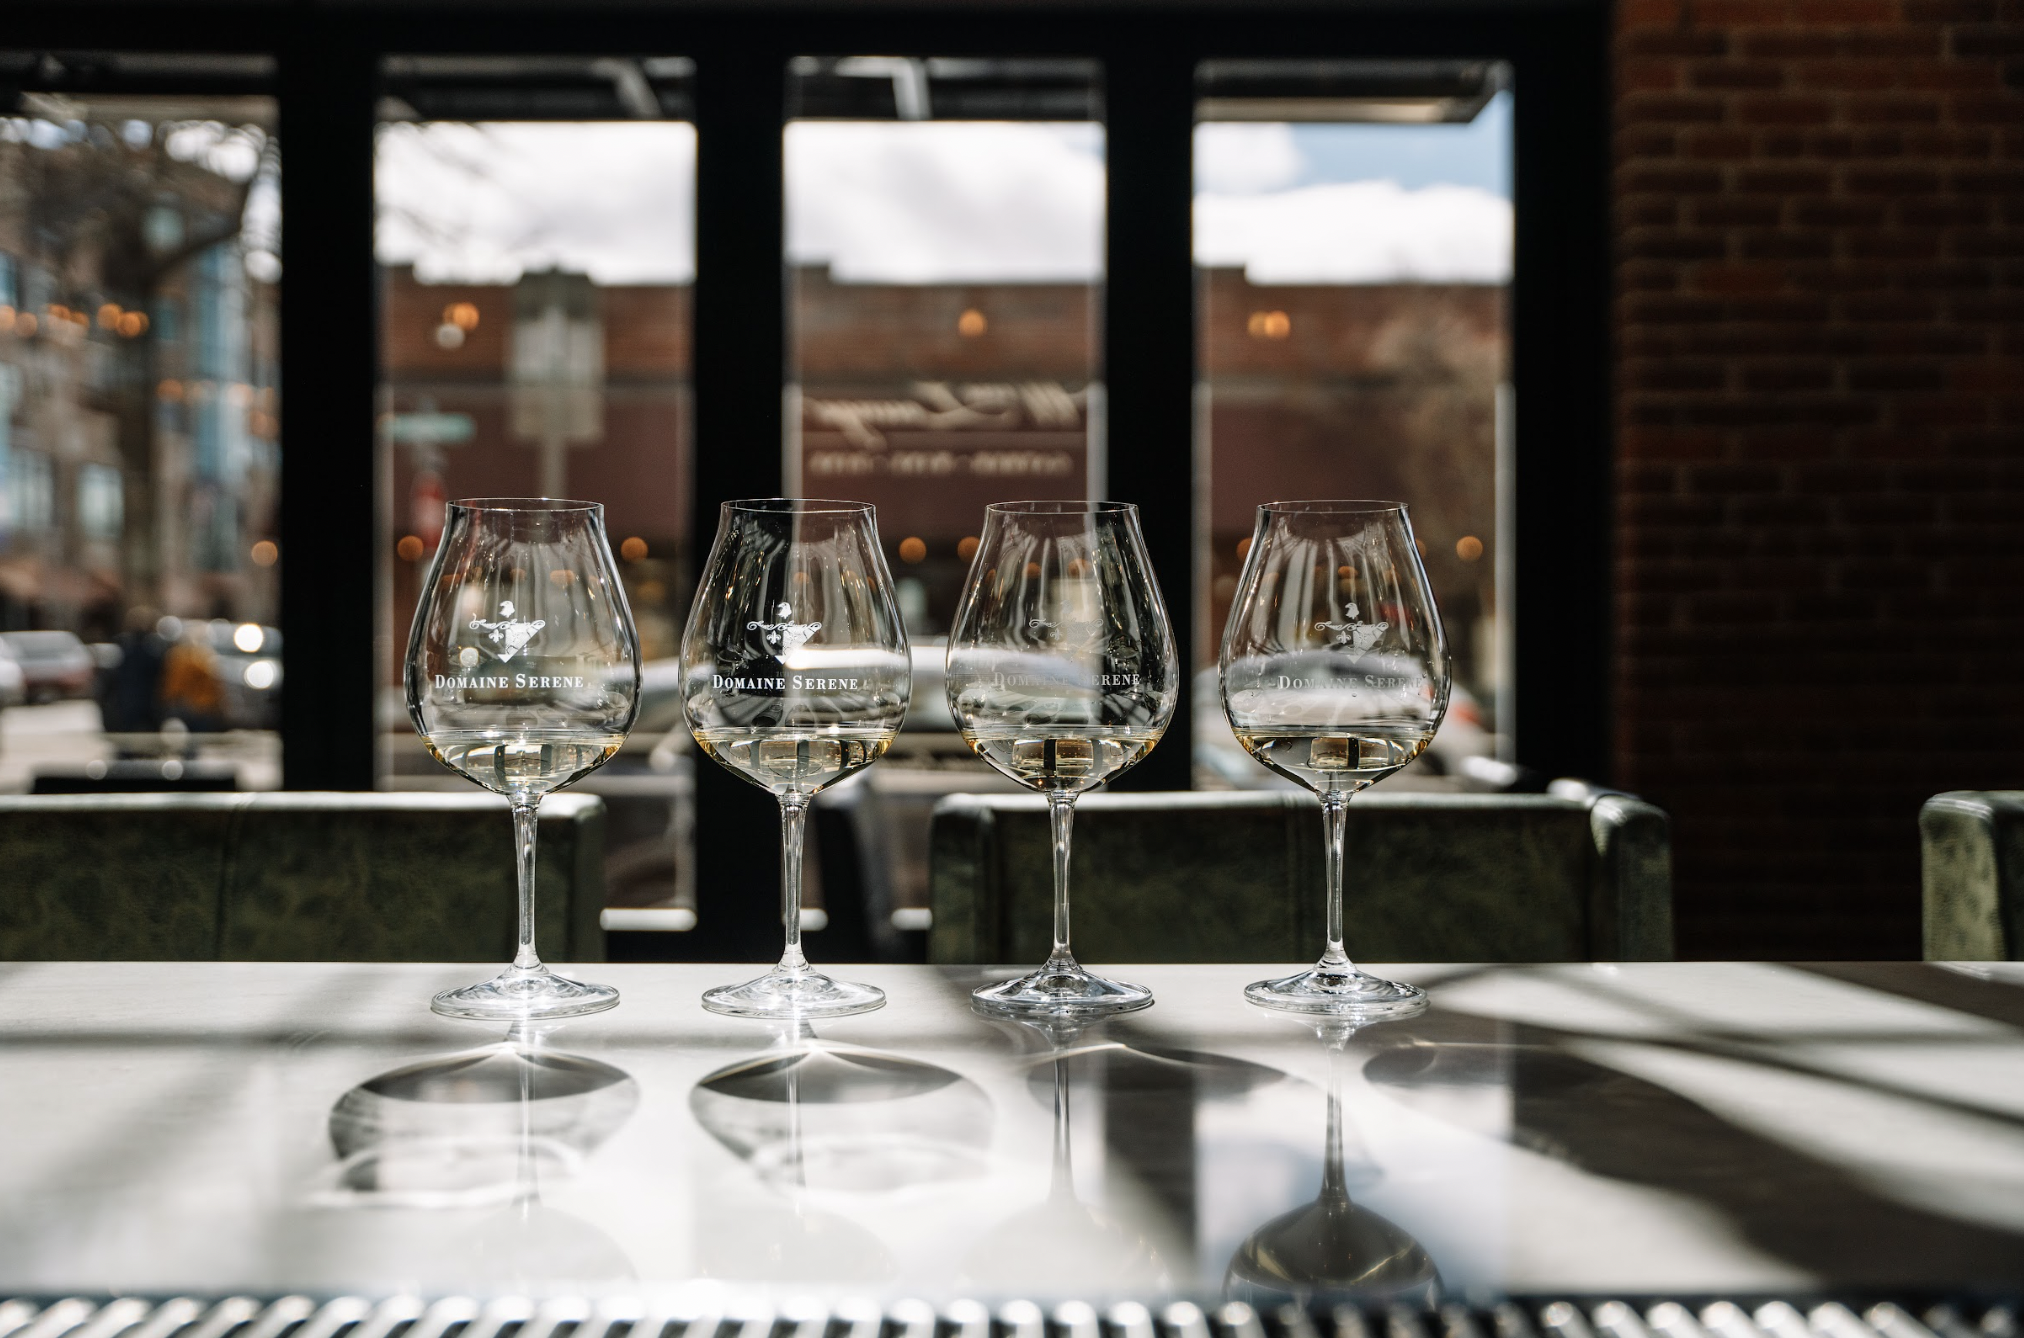 Domaine Serene wine glass line up